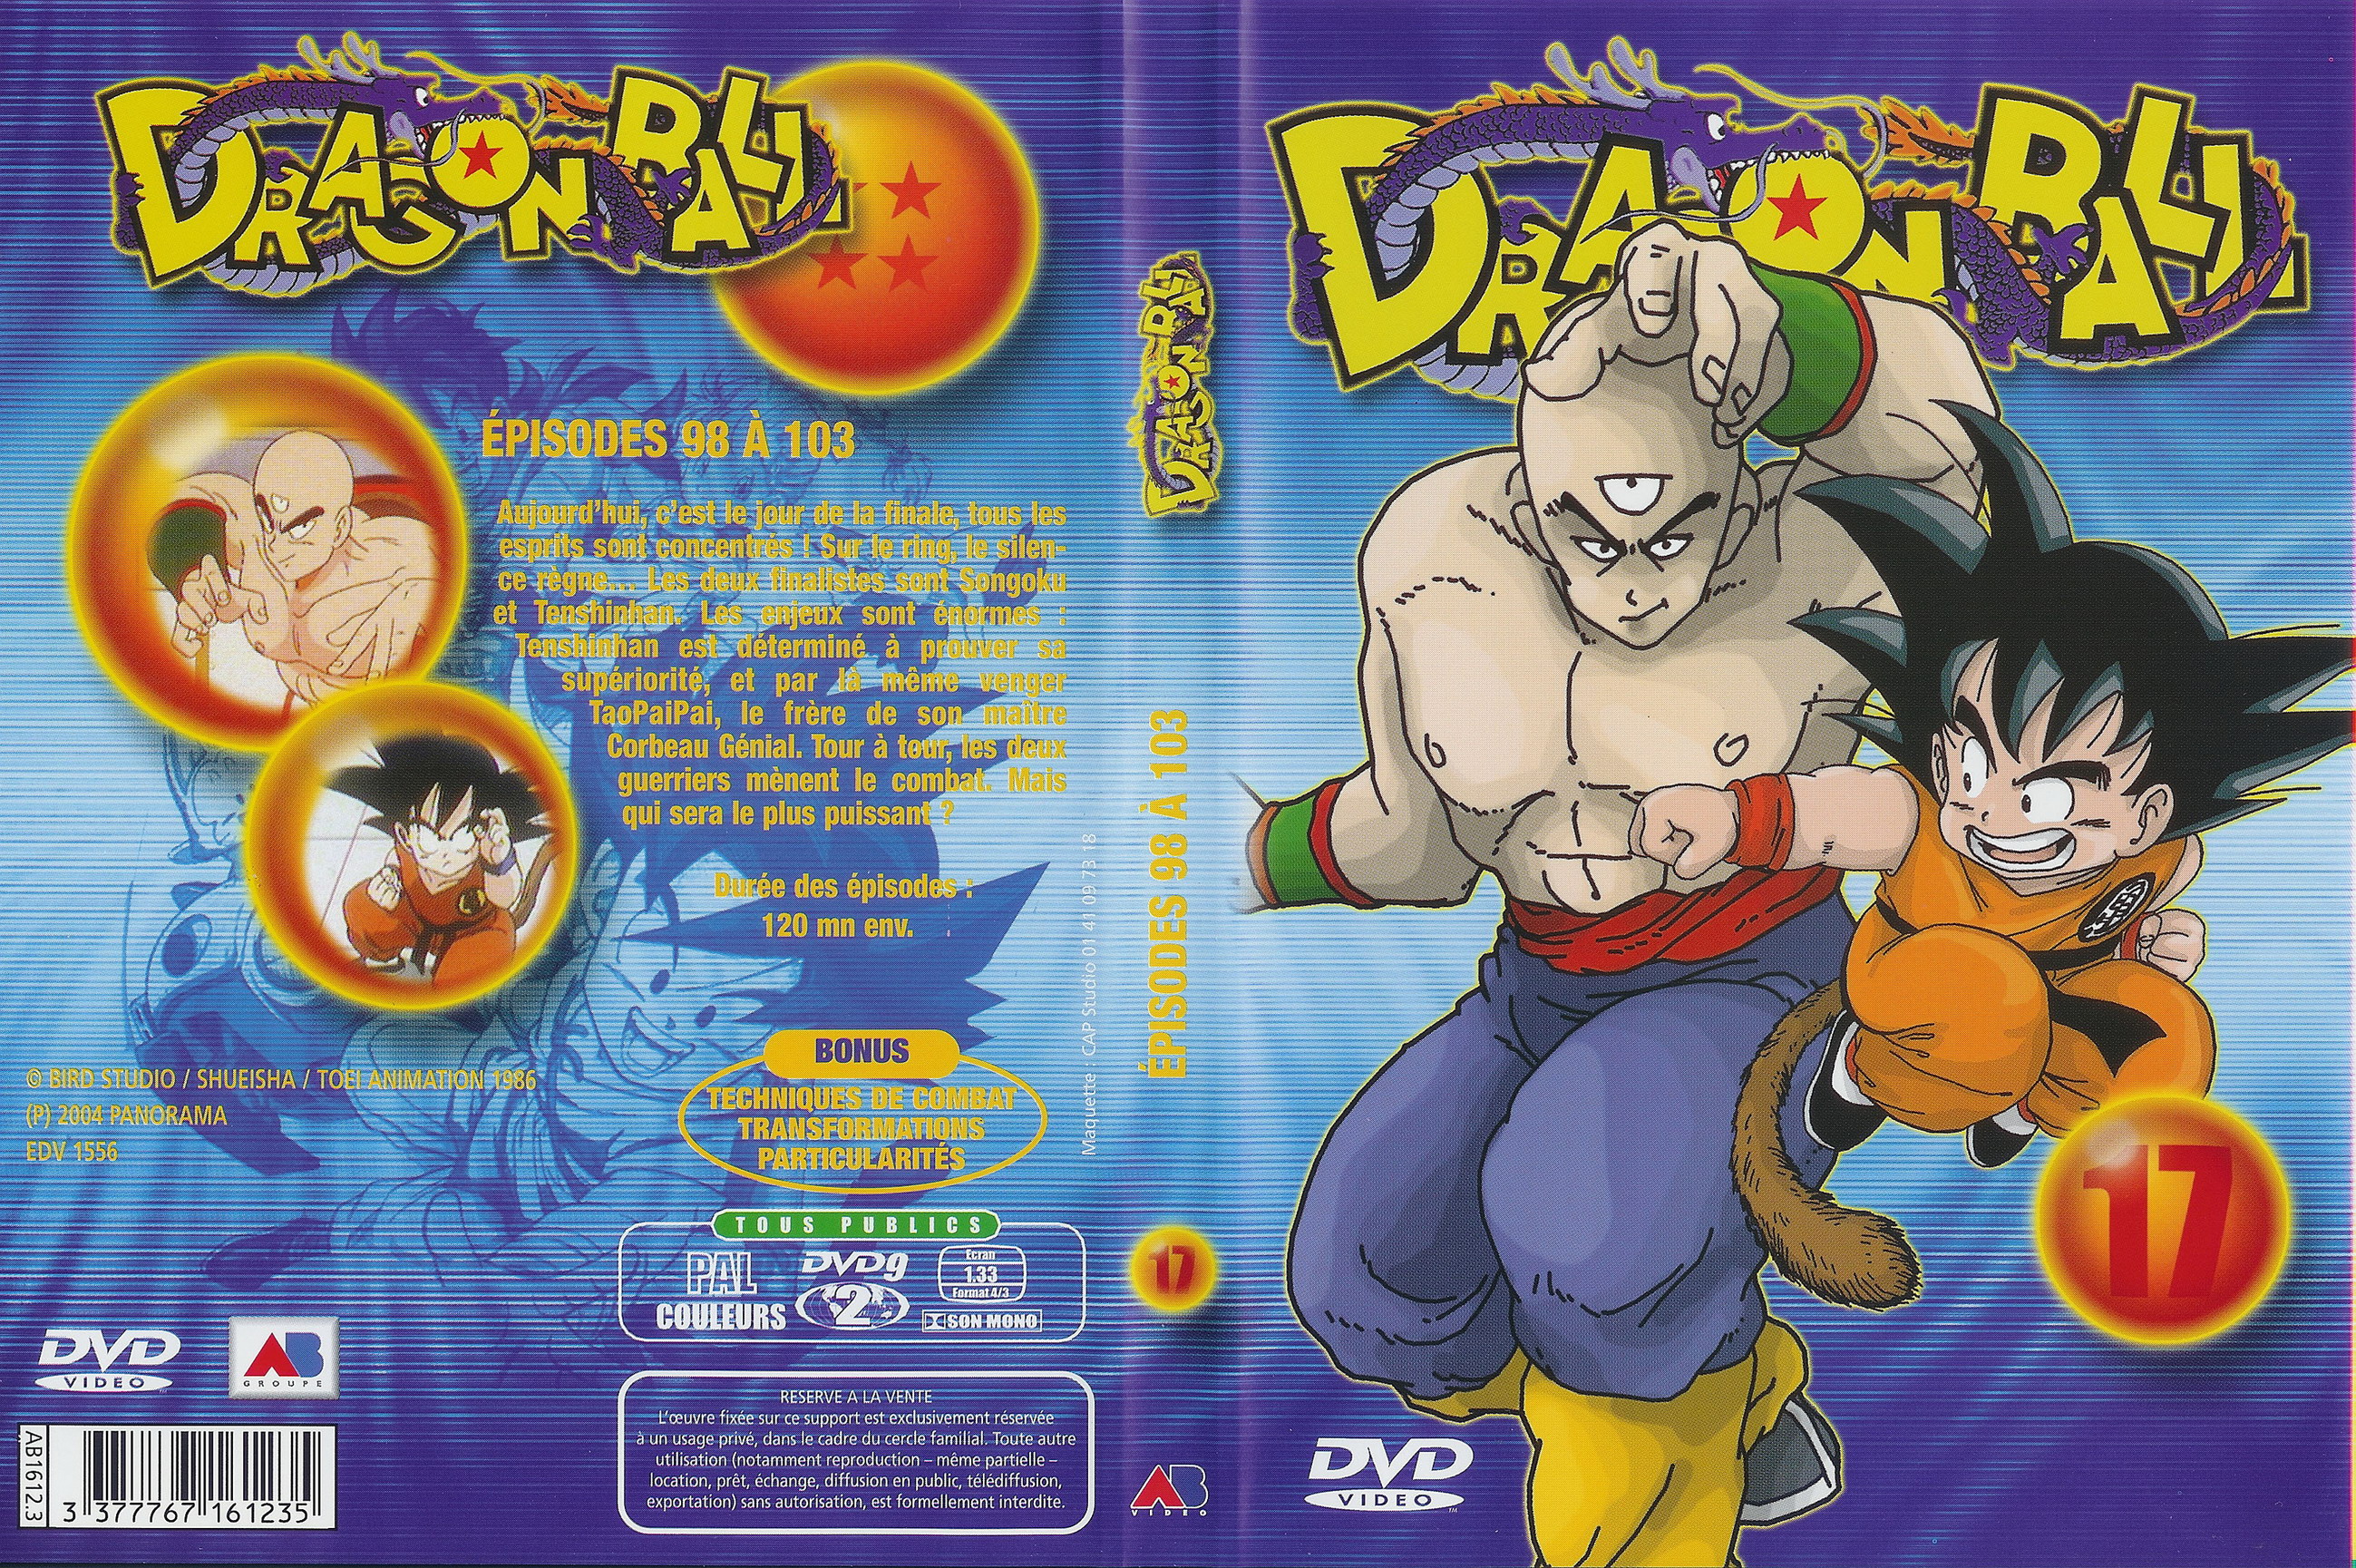 Jaquette DVD Dragon ball vol 17 v2